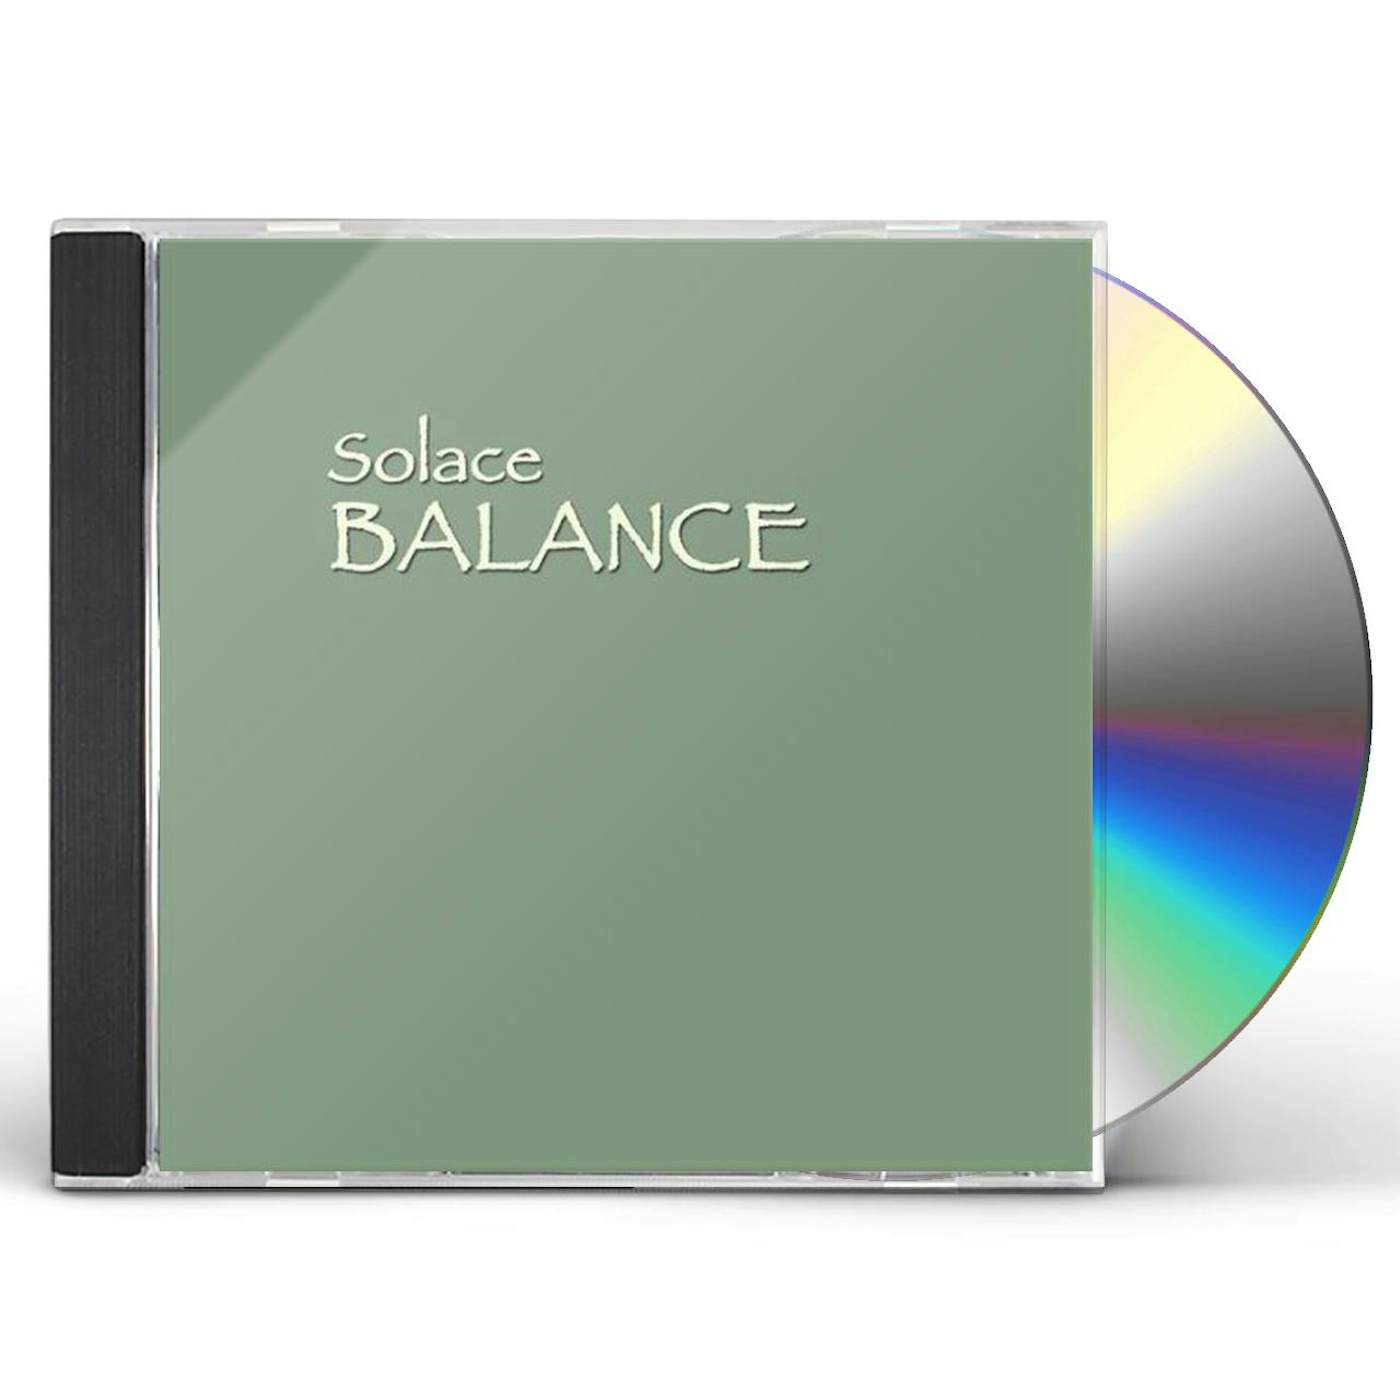 Solace BALANCE CD